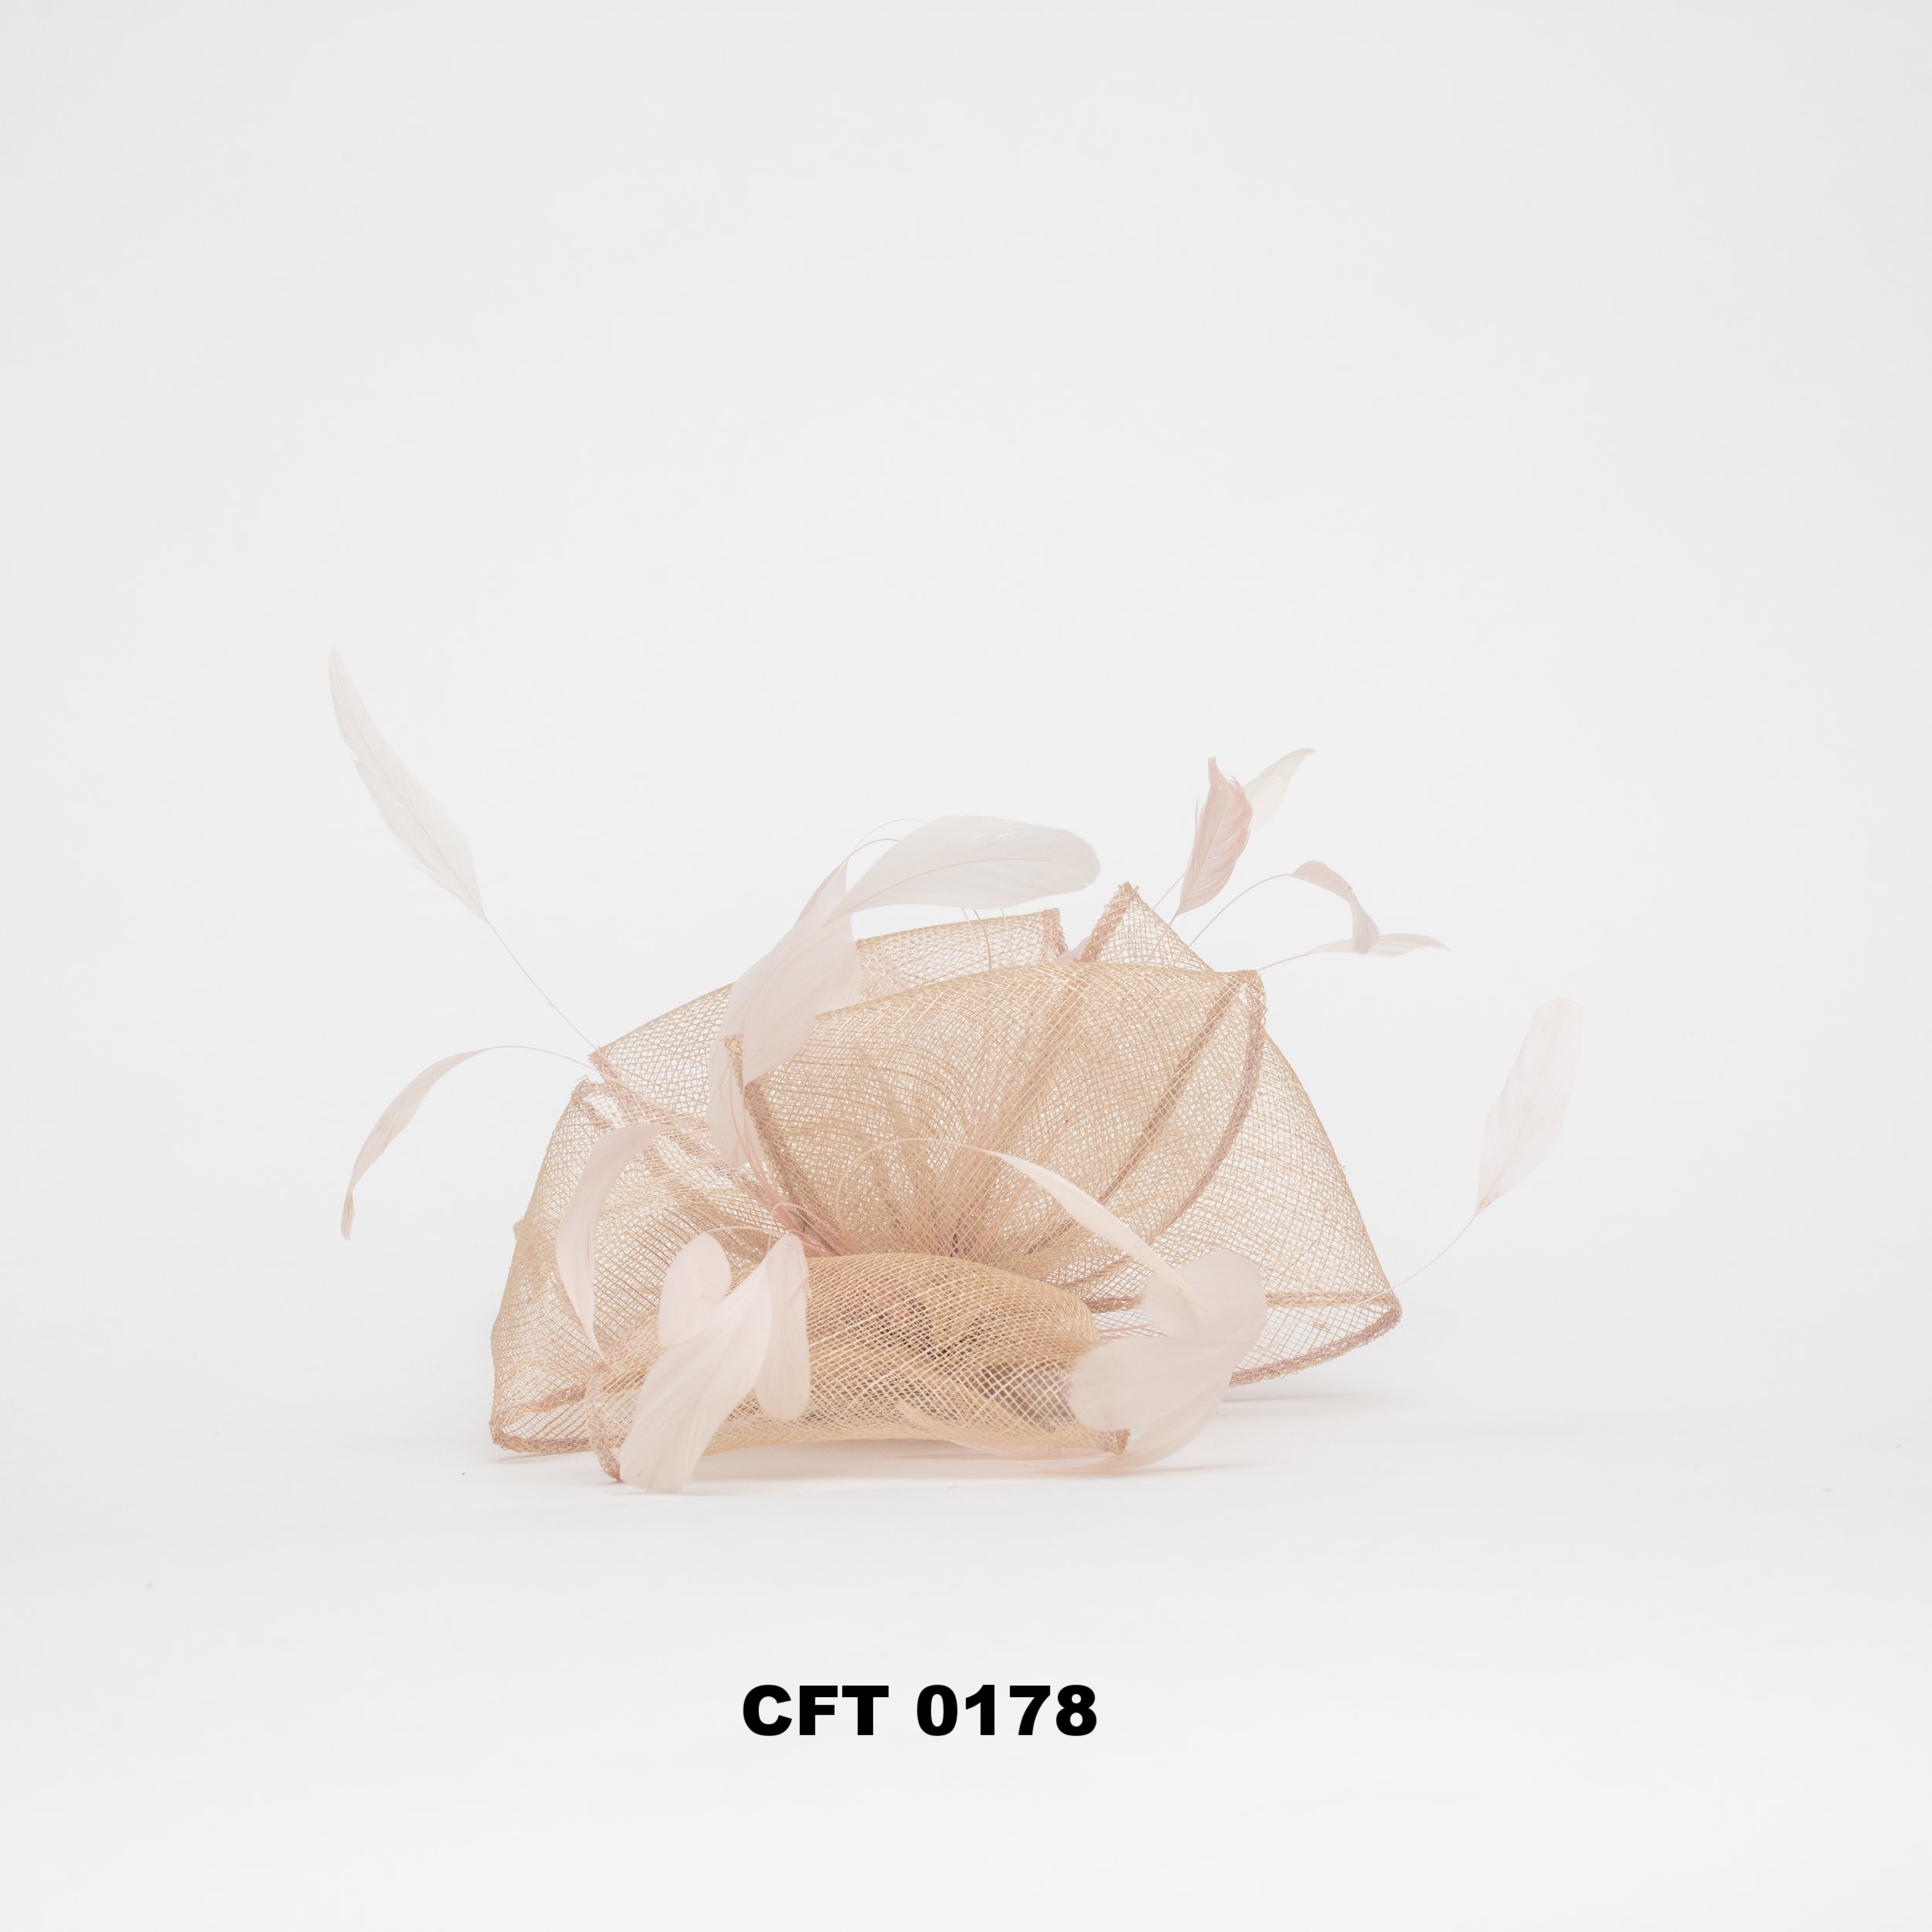 CFT 0178 (C).jpg